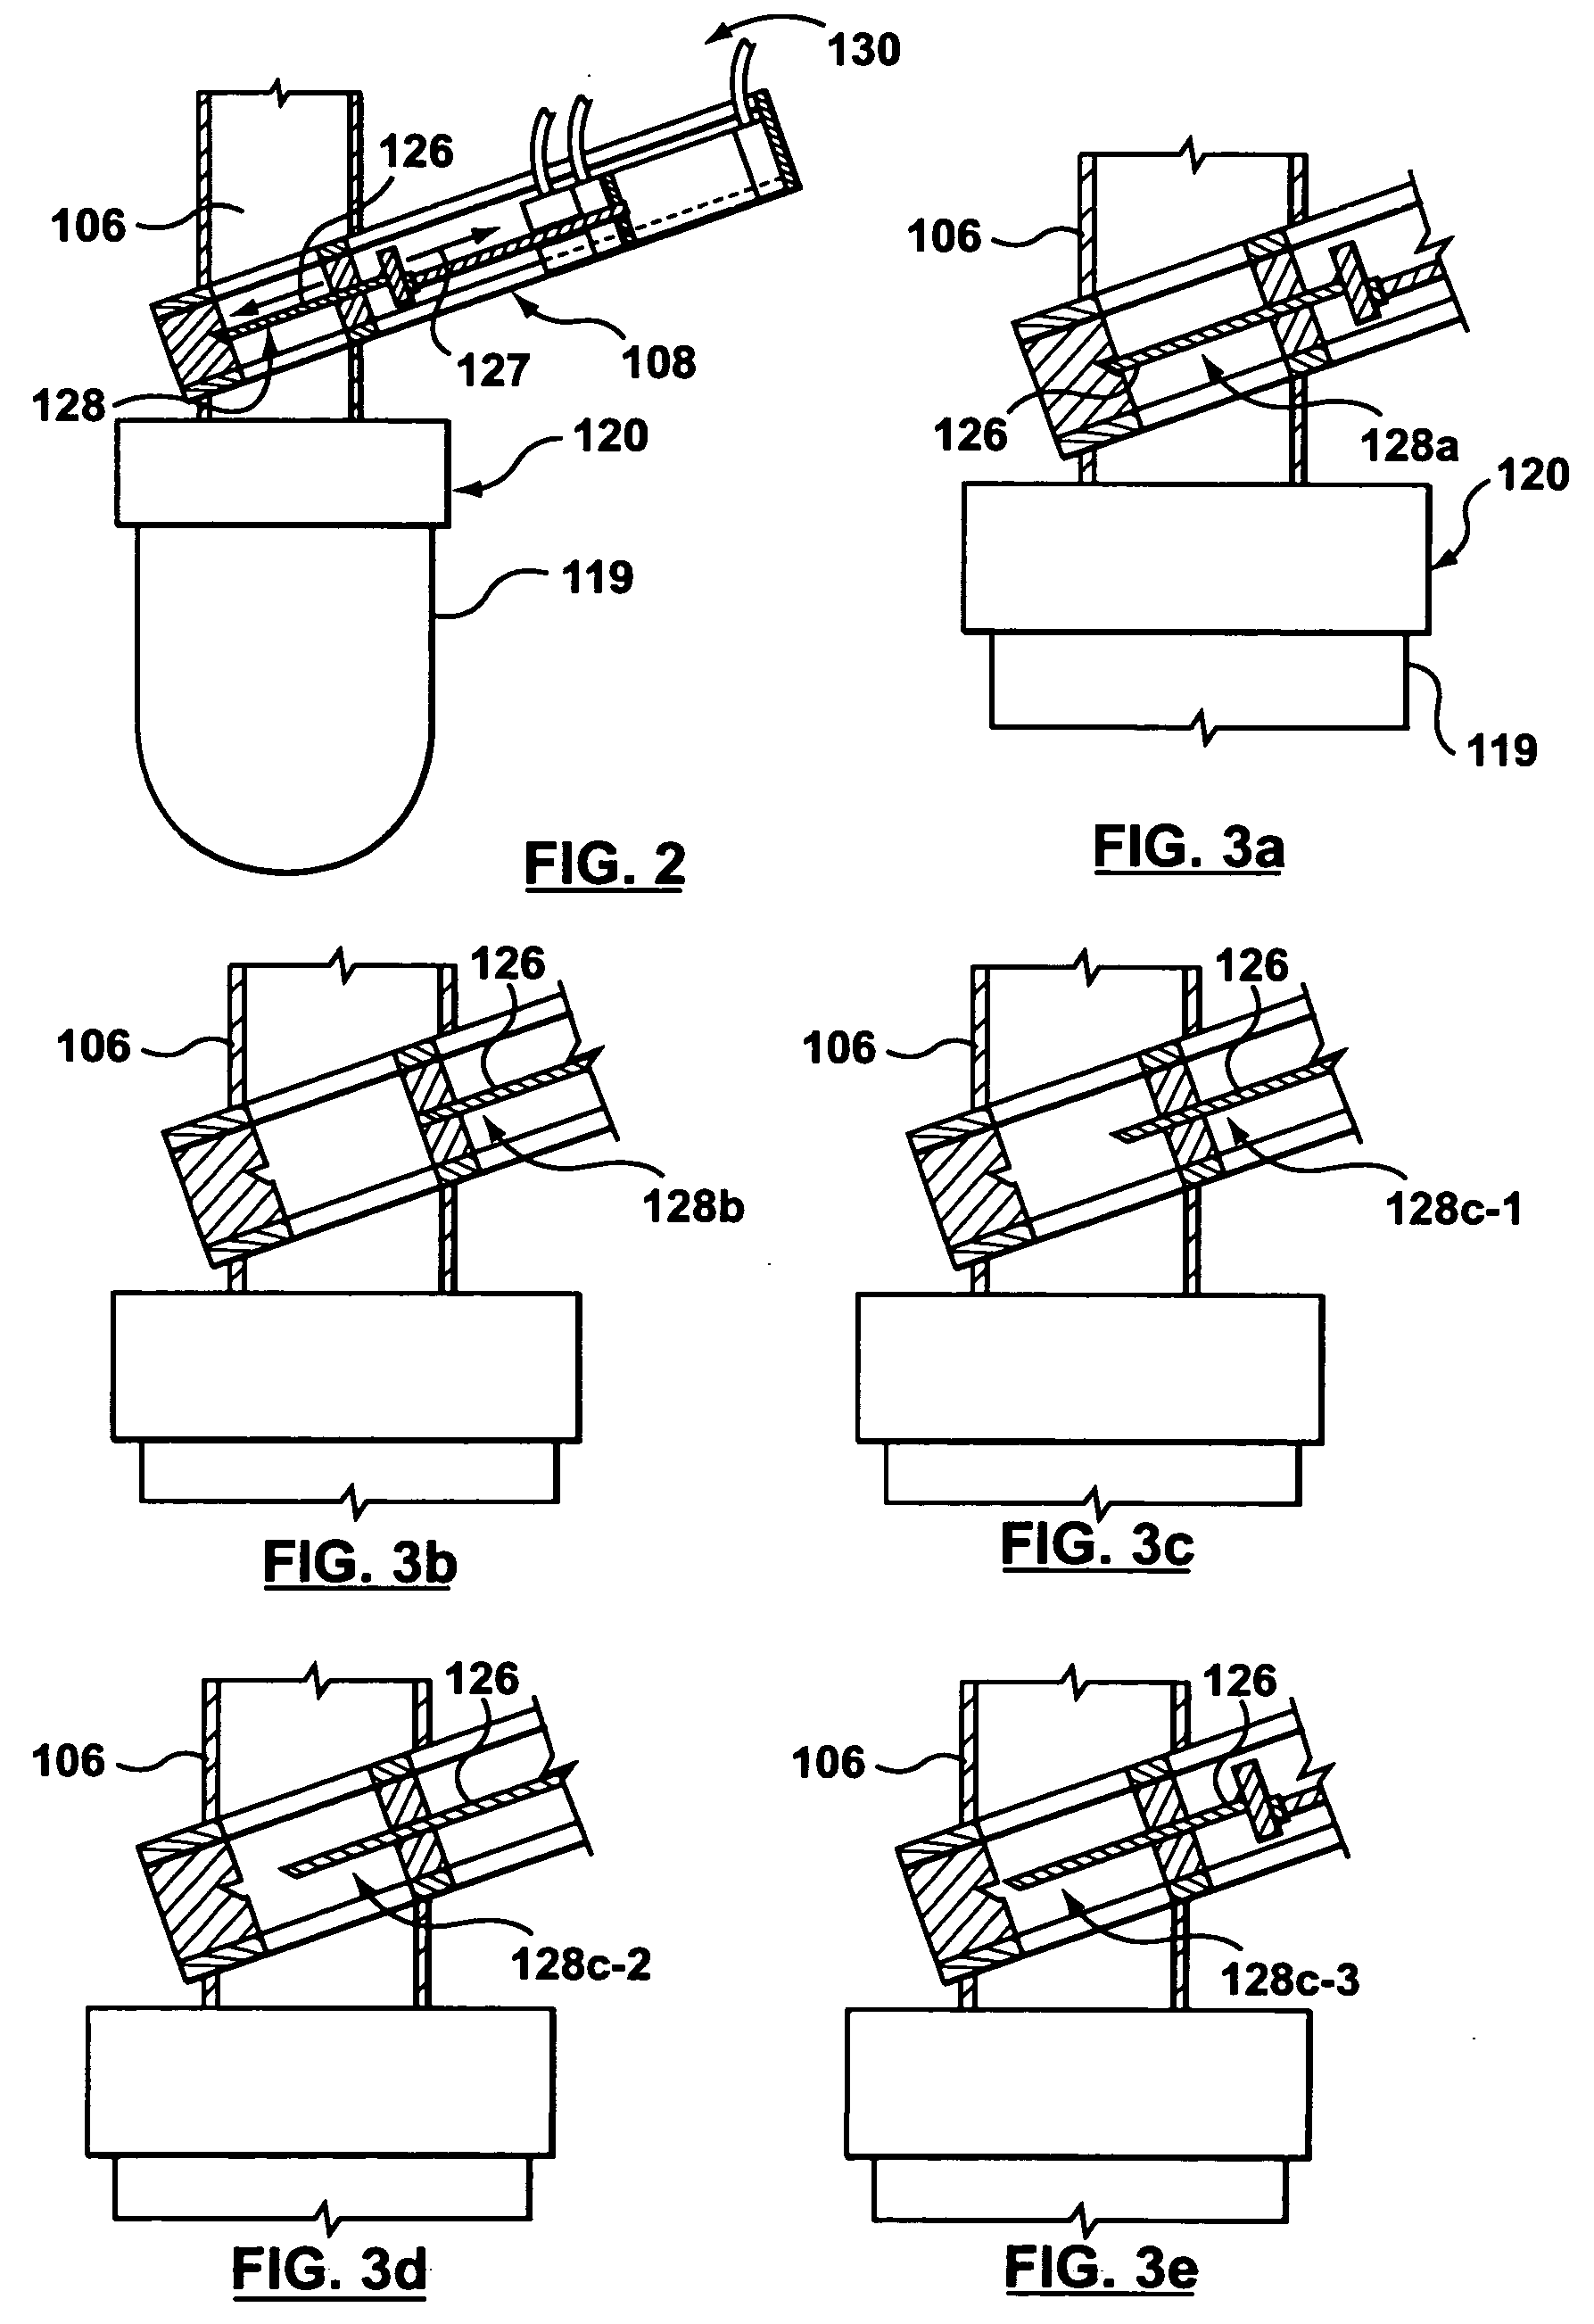 Product dispensing apparatus